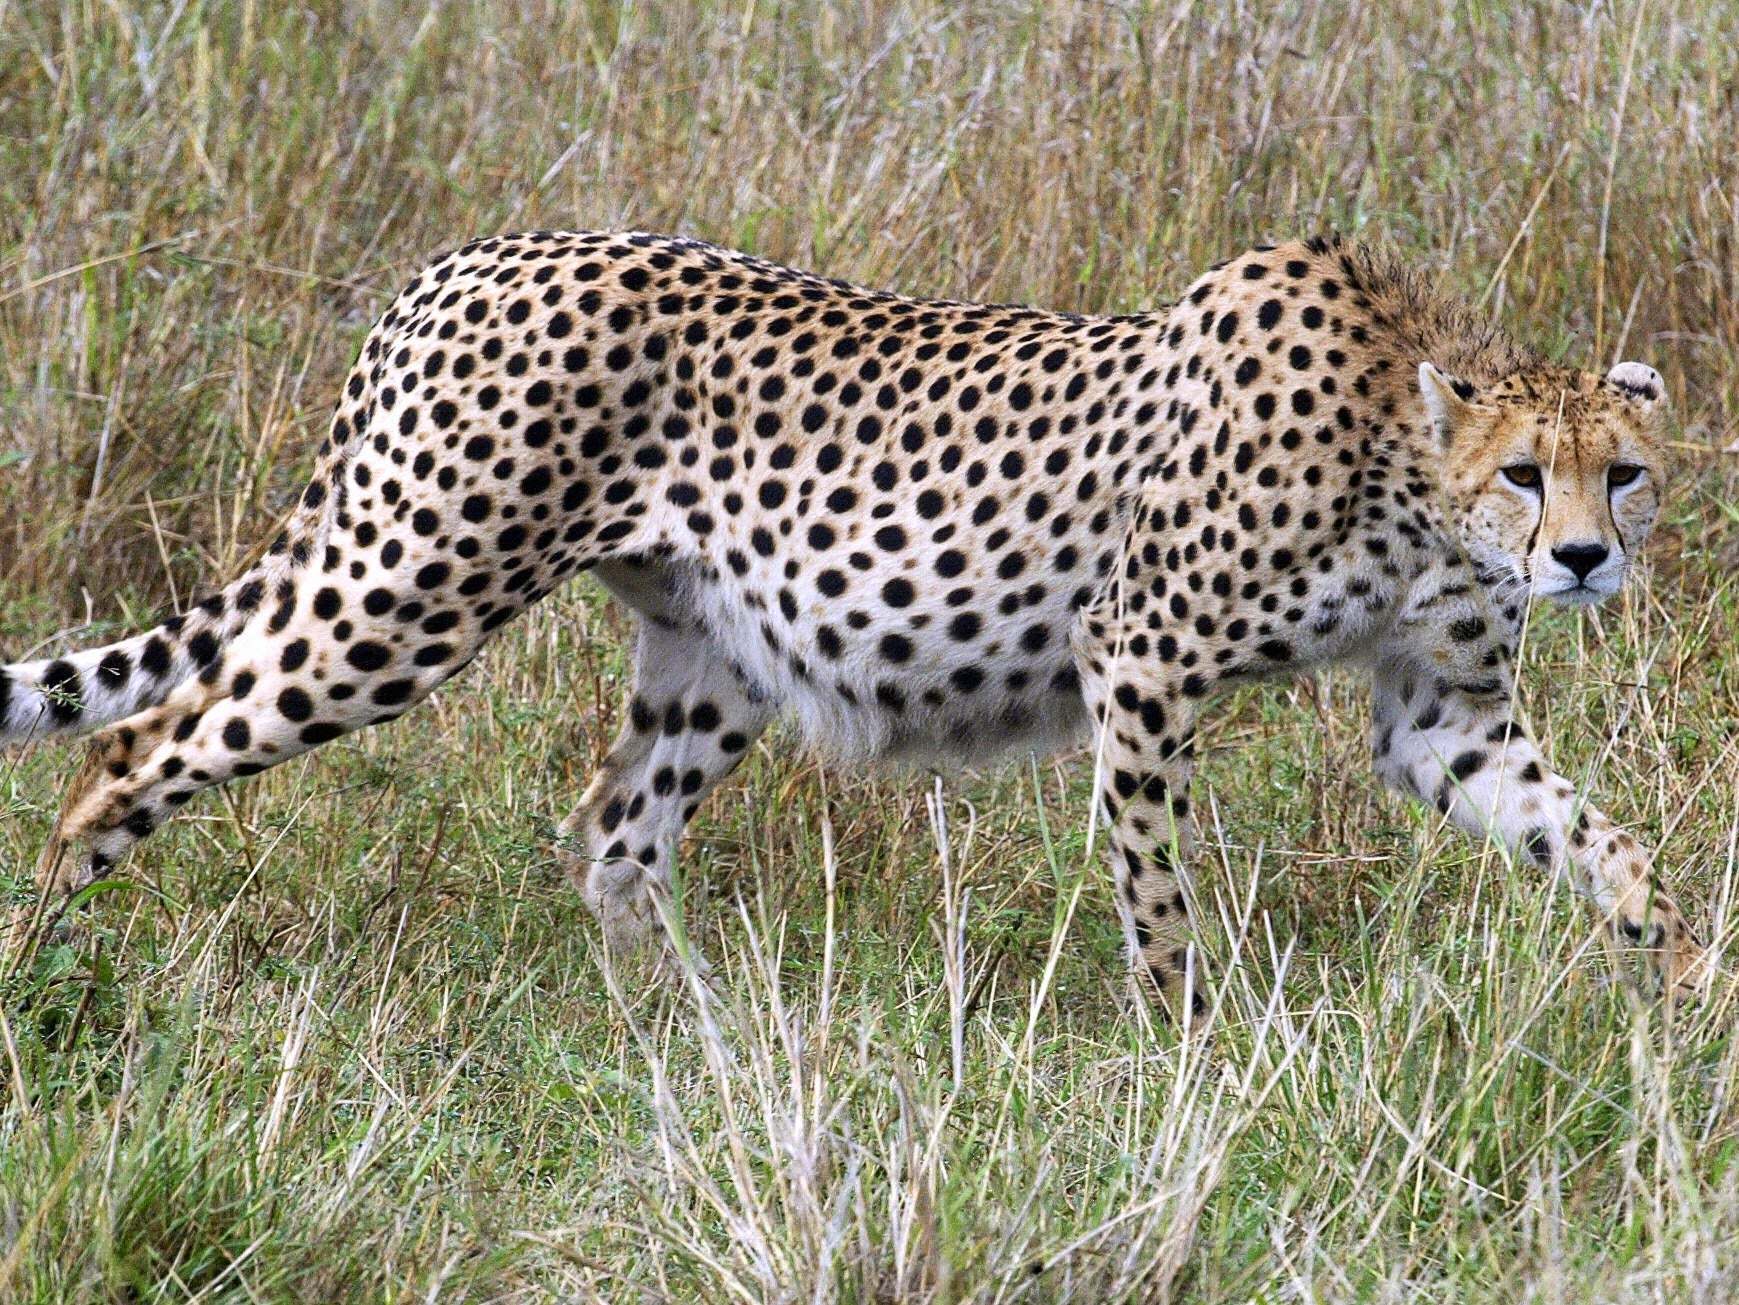 The huge majority of cheetahs live in Africa